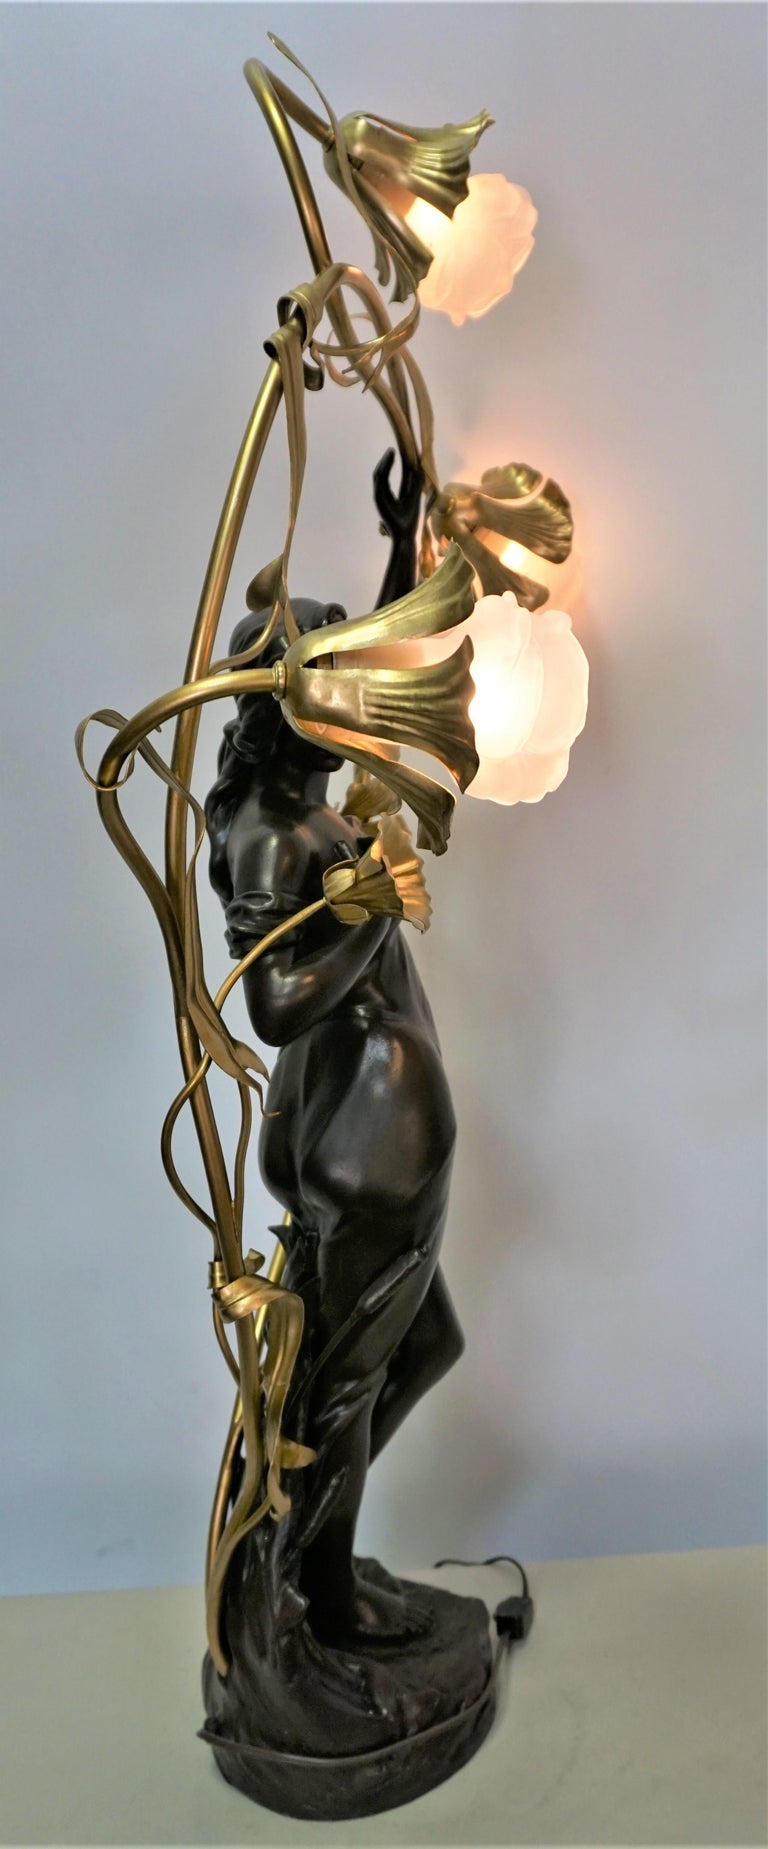 Early 20th Century Art Nouveau Sculpture Table Lamp For Sale